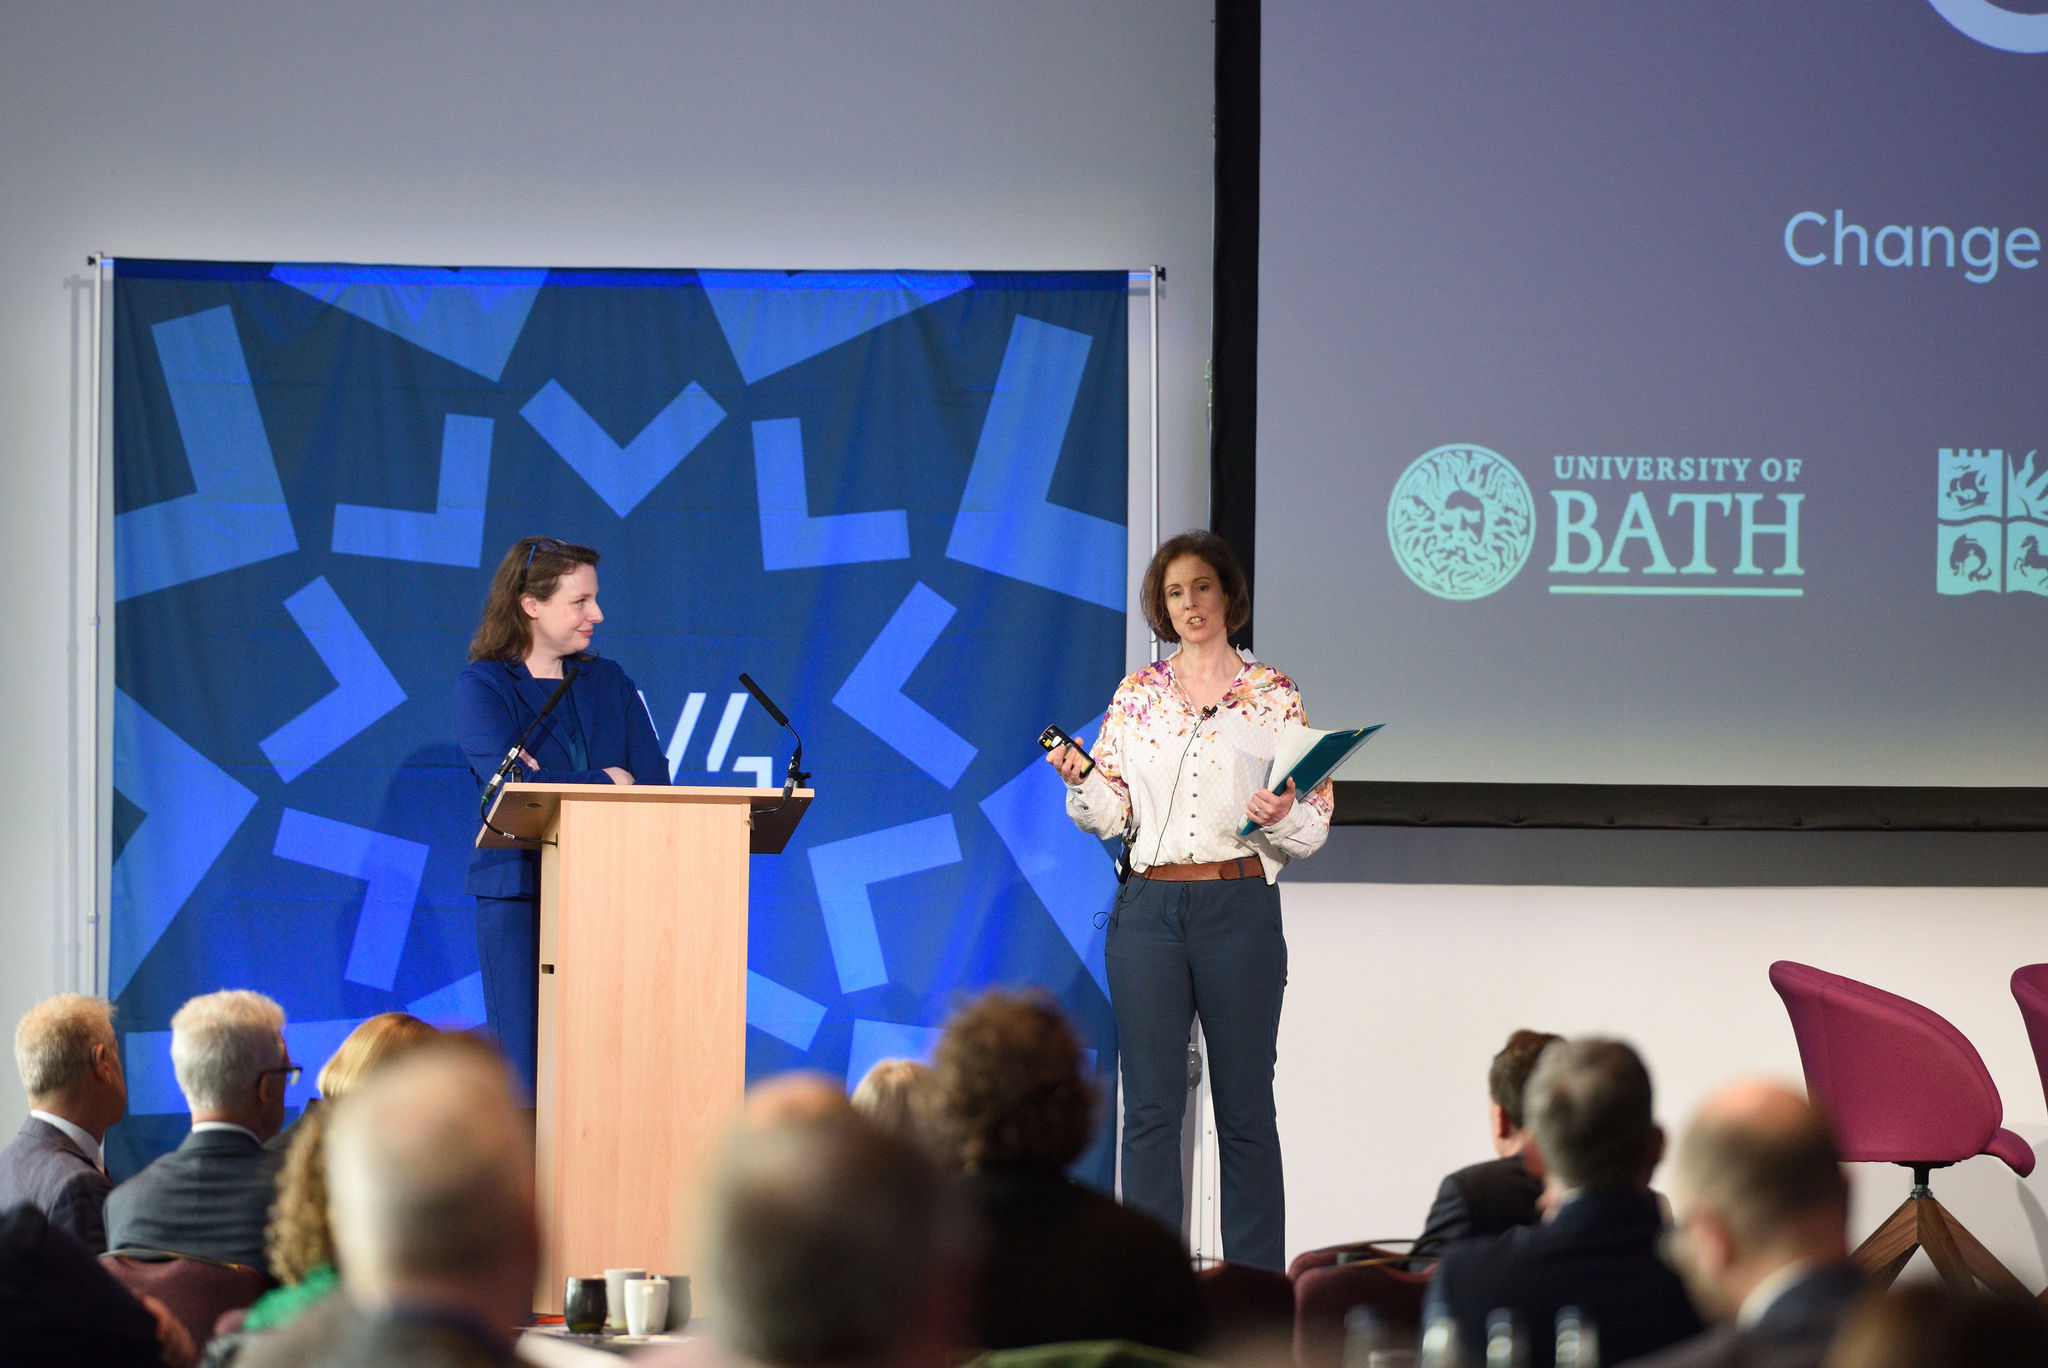 Dr Joanna Jenkinson and Facilitator Kate Tapper introduce event